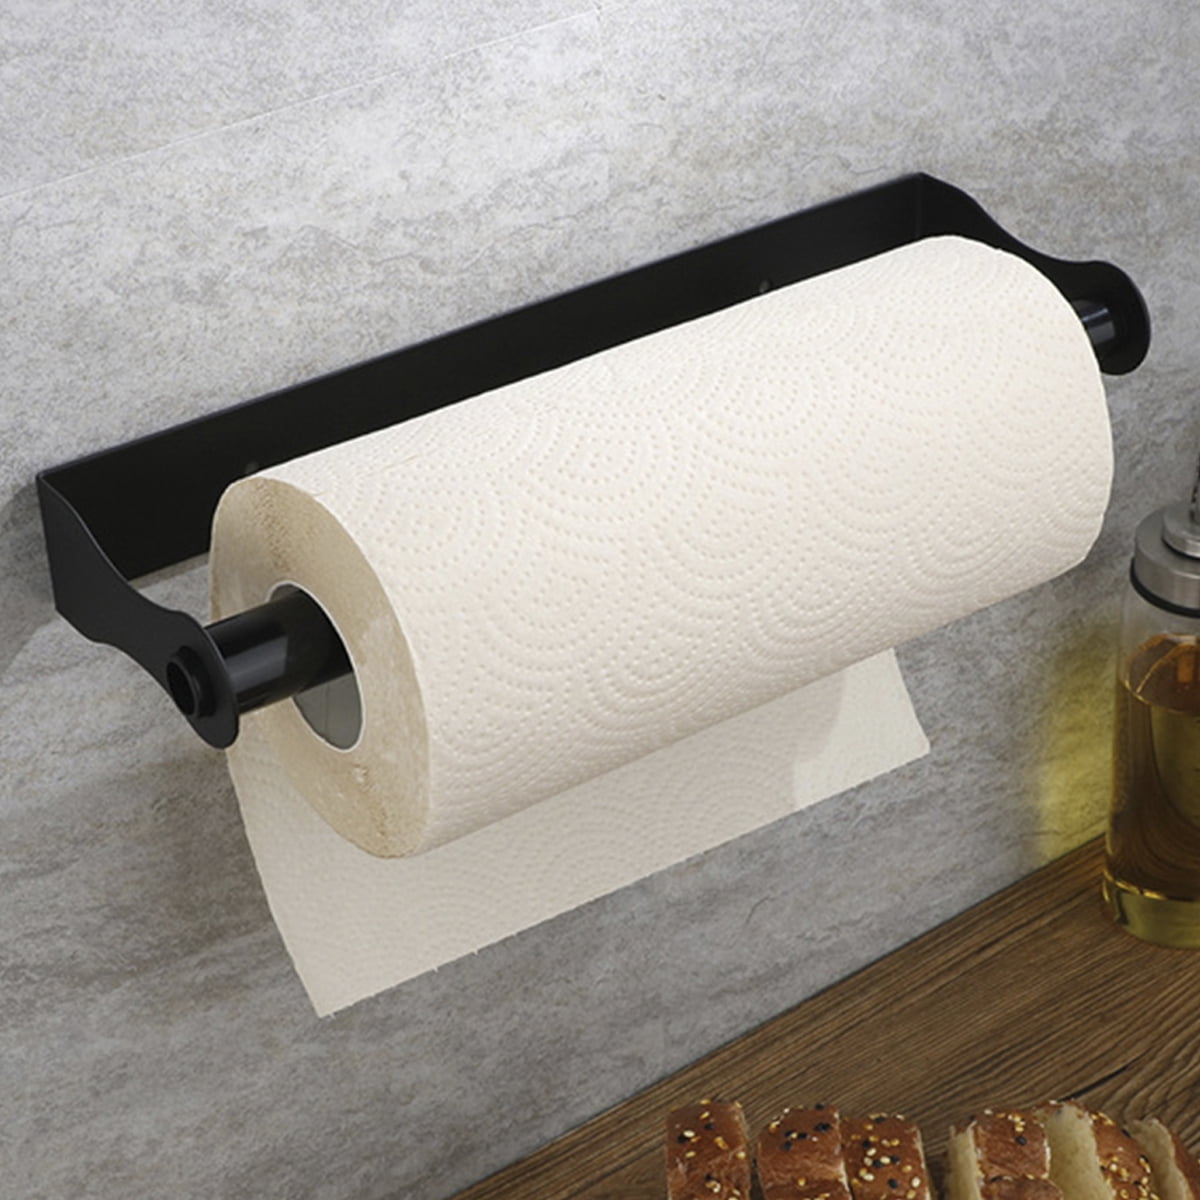 walmart towel rack and toilet paper holder Deago wall mounted bathroom toilet paper holder rack stainless steel